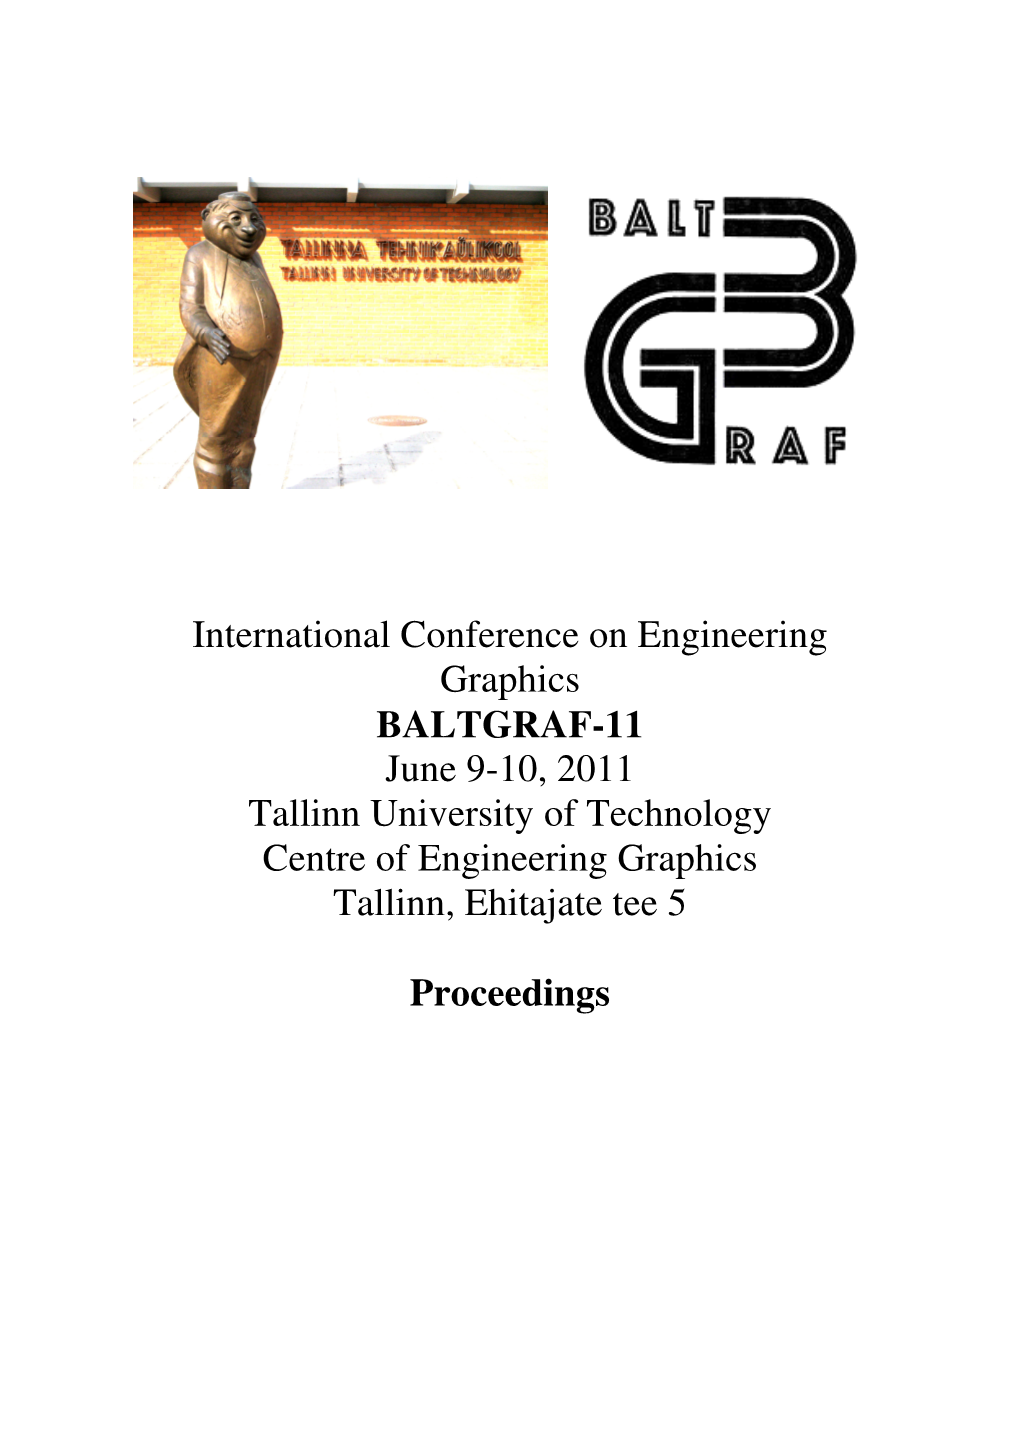 International Conference on Engineering Graphics BALTGRAF-11 June 9-10, 2011 Tallinn University of Technology Centre of Engineering Graphics Tallinn, Ehitajate Tee 5